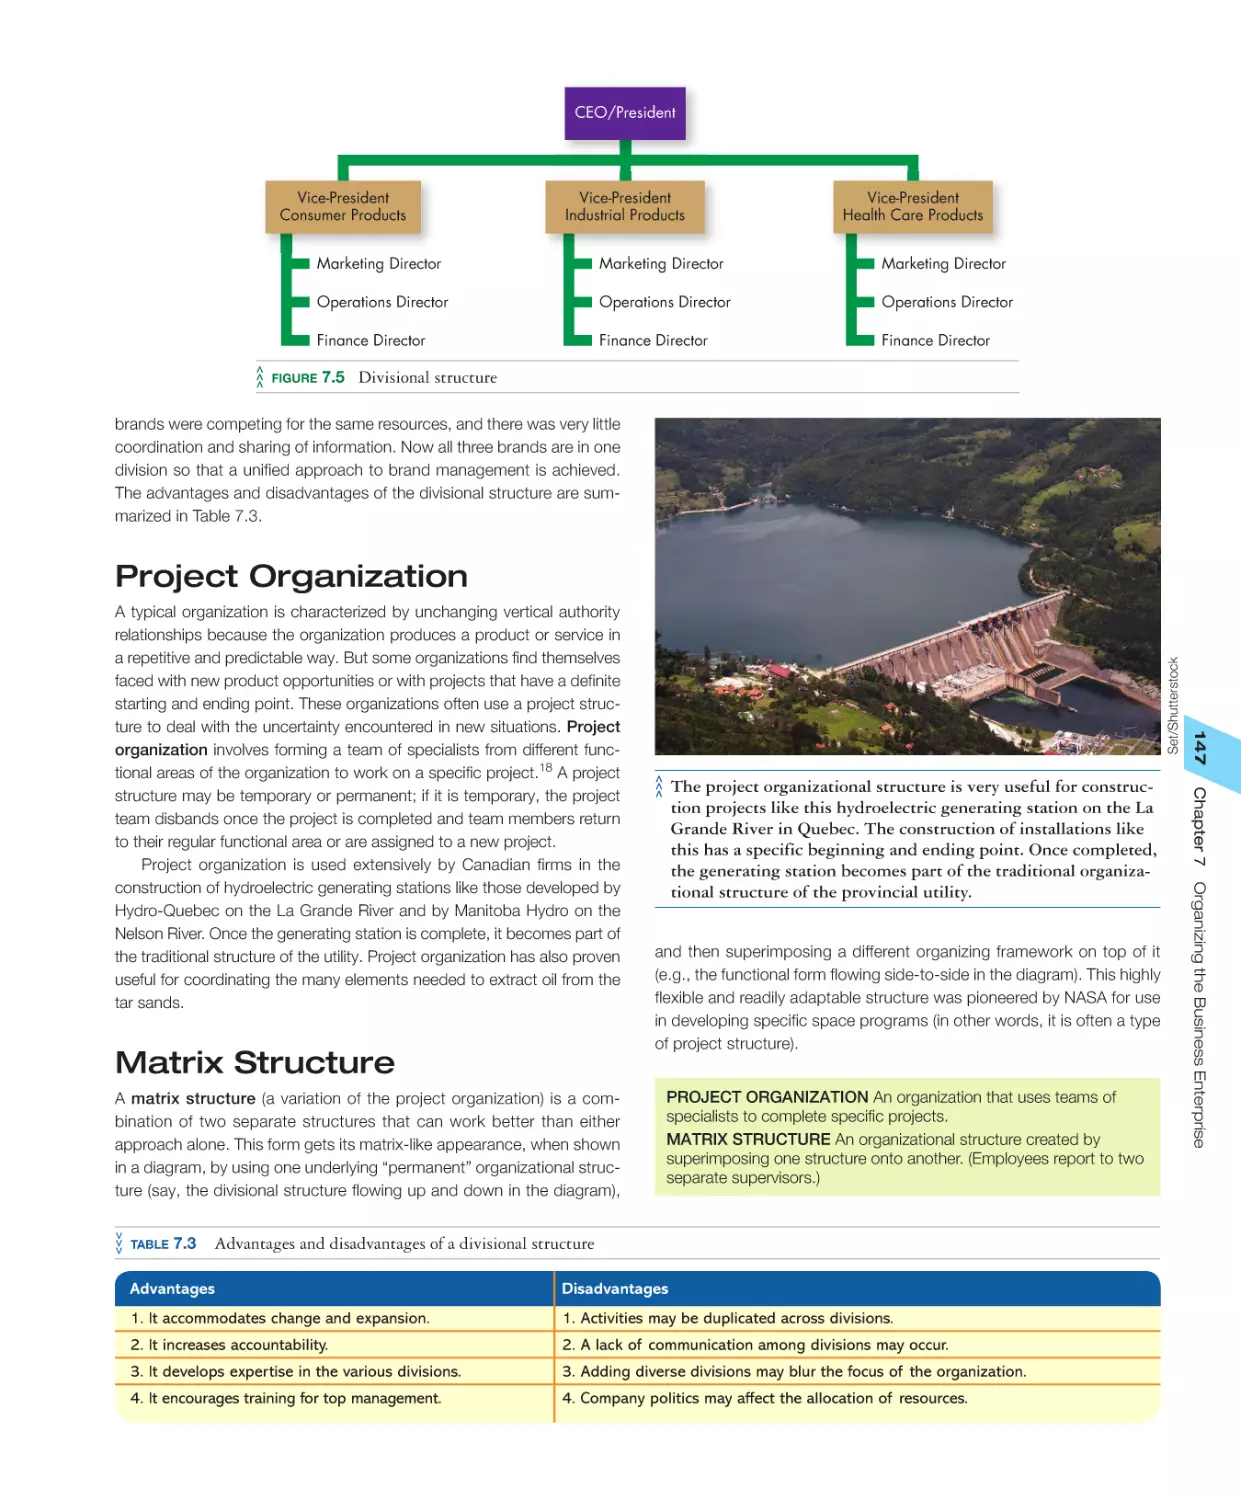 Project Organization
Matrix Structure